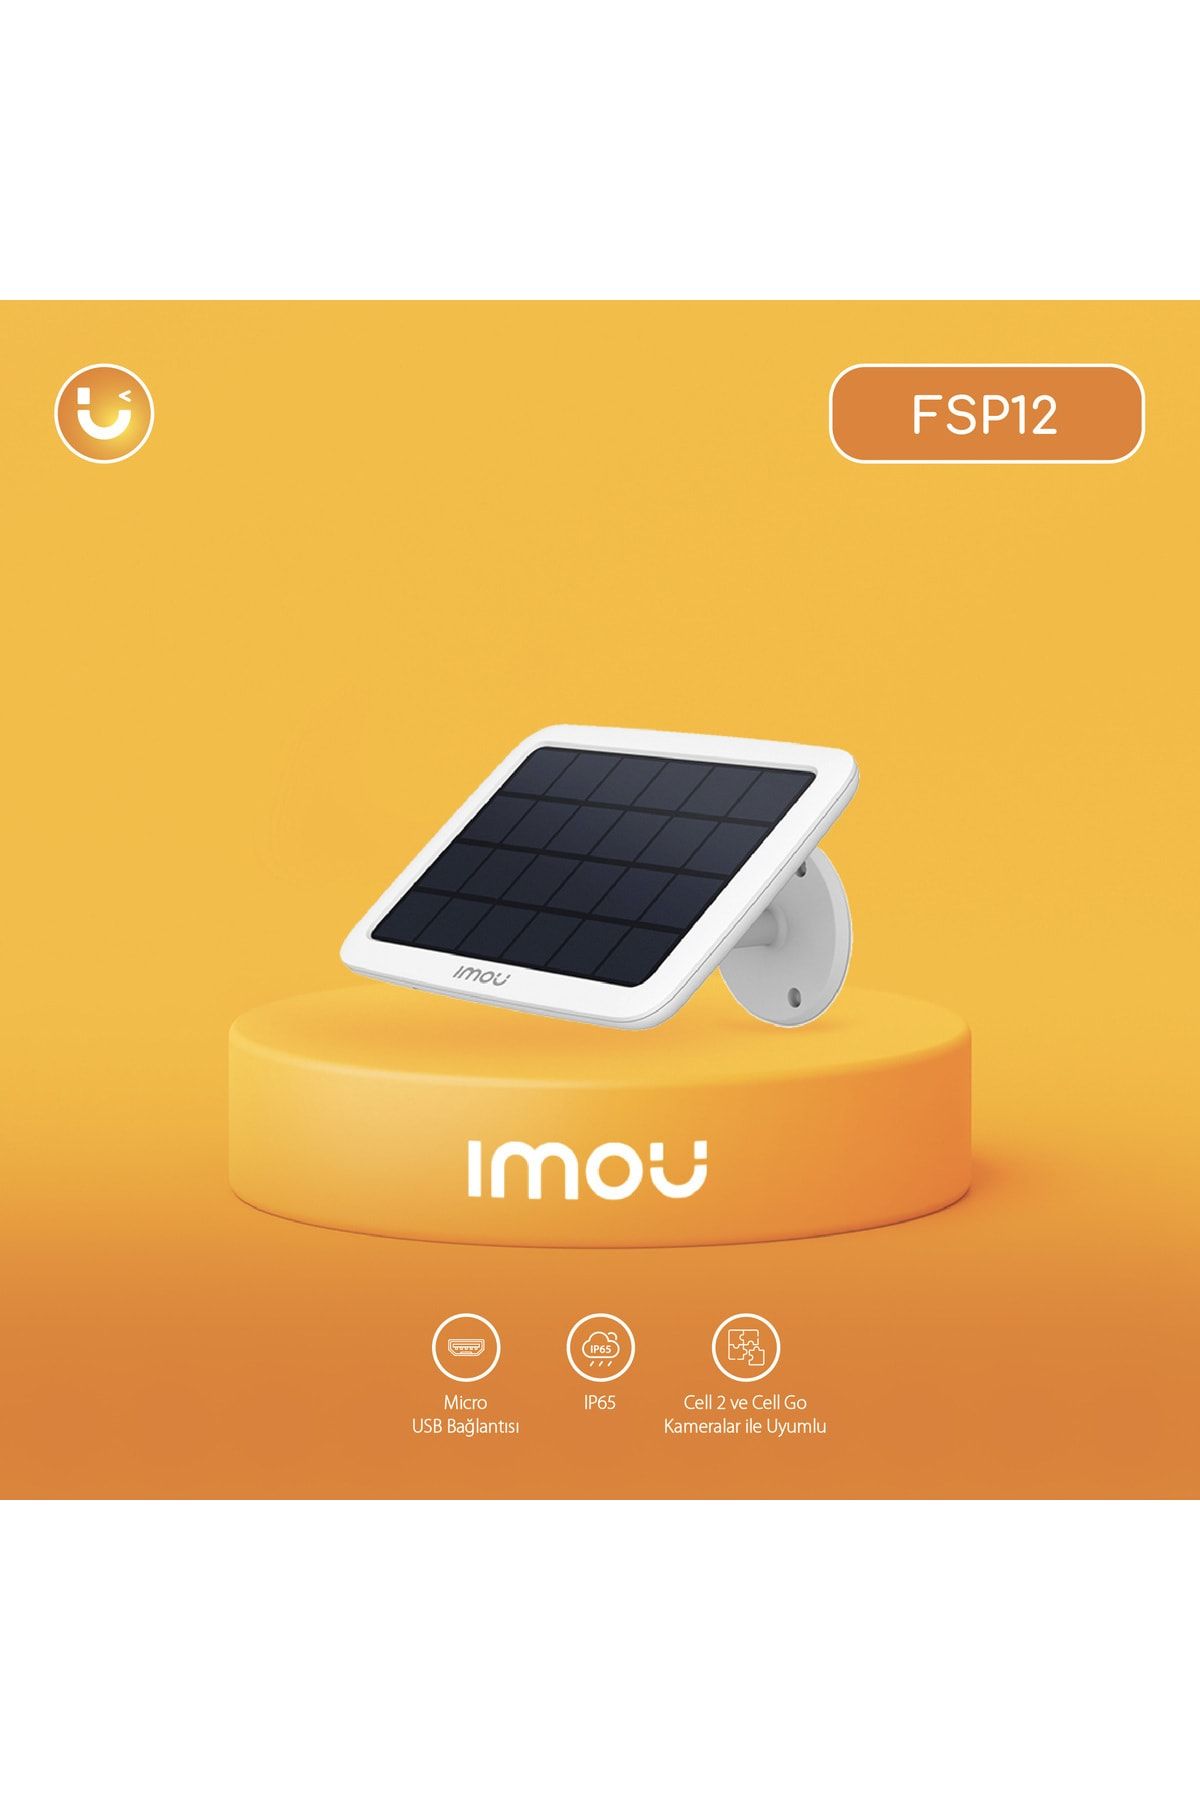 Imou Solar Panel / Cell Go ve Cell 2 Kameralarla Uyumlu - IP65 - Micro USB Bağlantısı (FSP12)